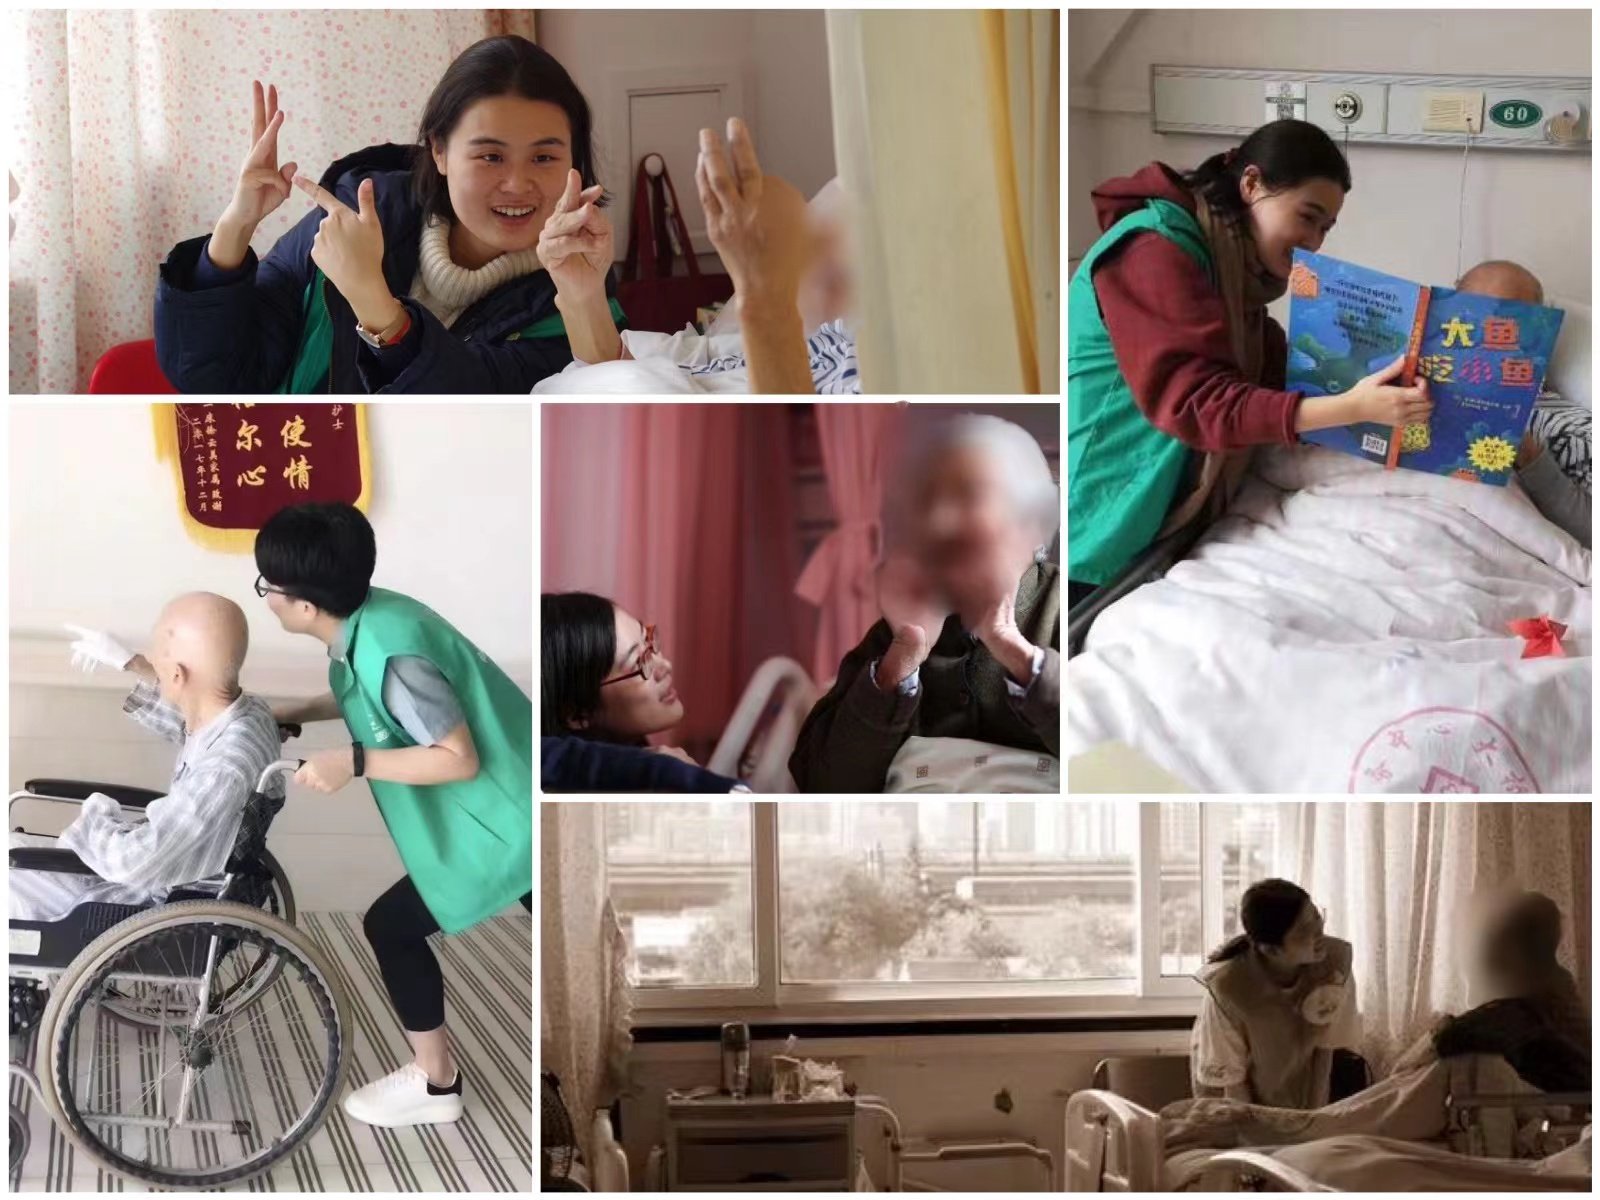 Zhou Yan: The 手牵手 [Shǒuqiānshǒu] organisation sends volunteers like her to hospice units within hospitals across China. (2)